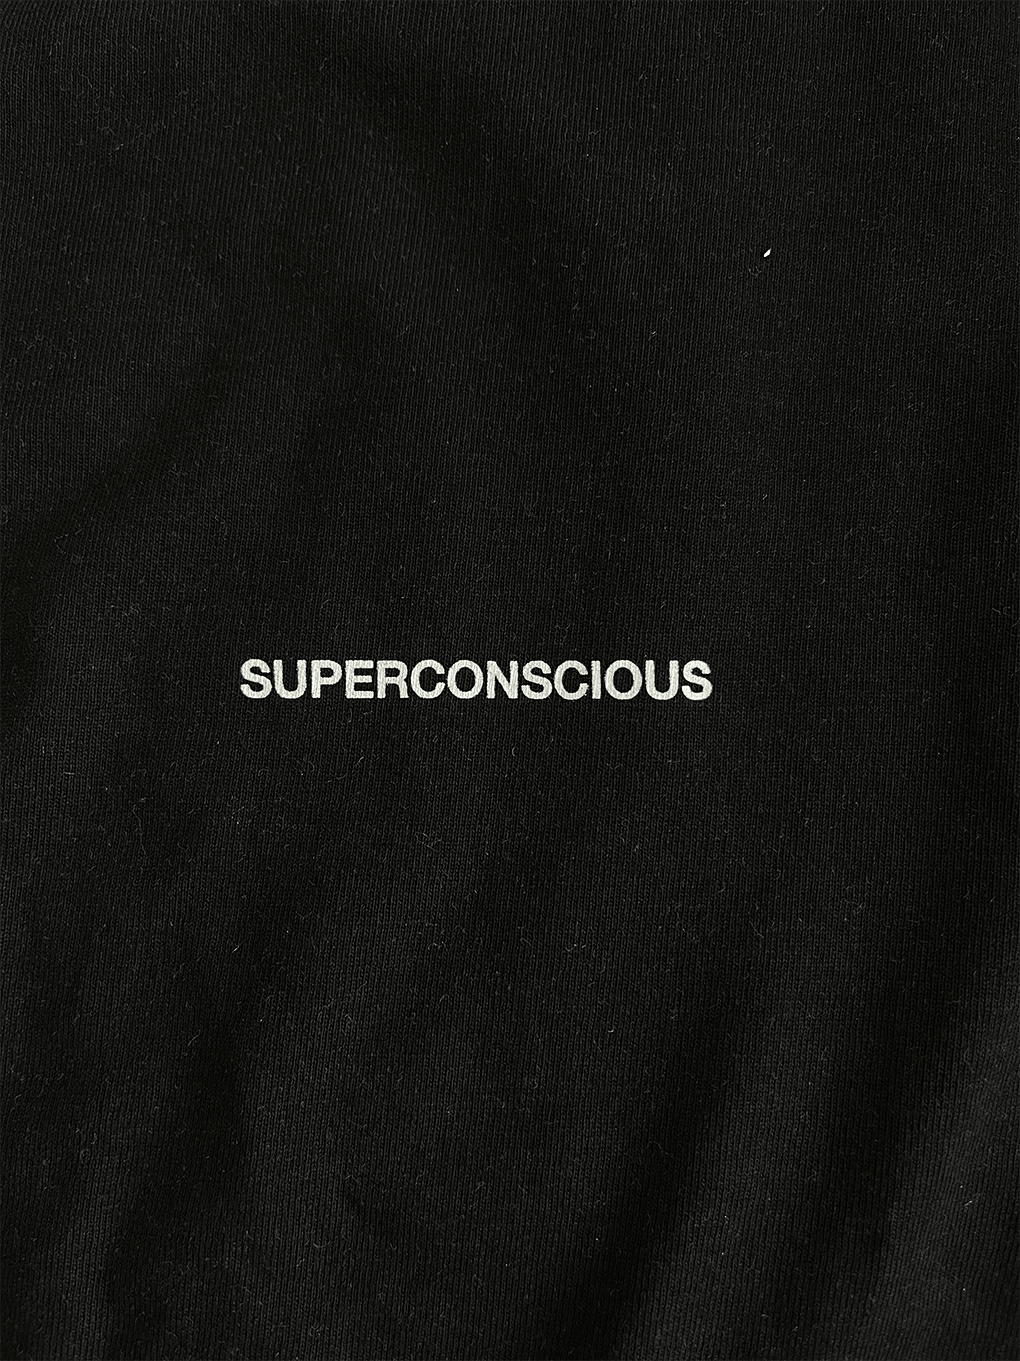 Superconscious NOT T-Shirt - Black / Metal - T-Shirts